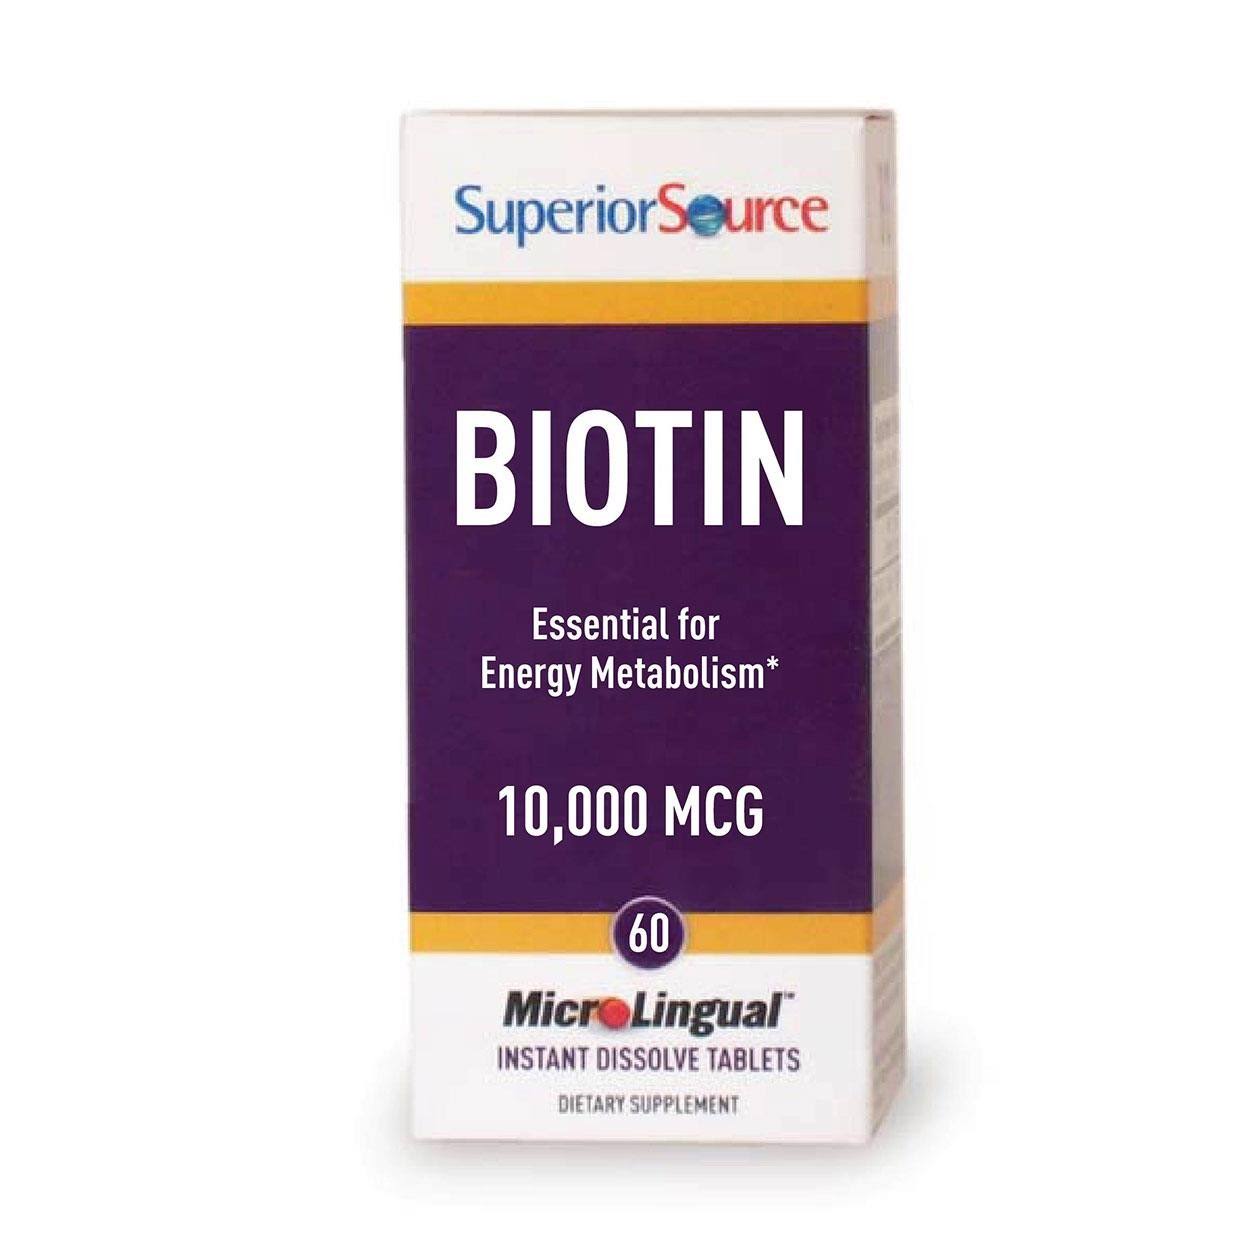 Superior Source Biotin 10,000 mcg Tablets - x60